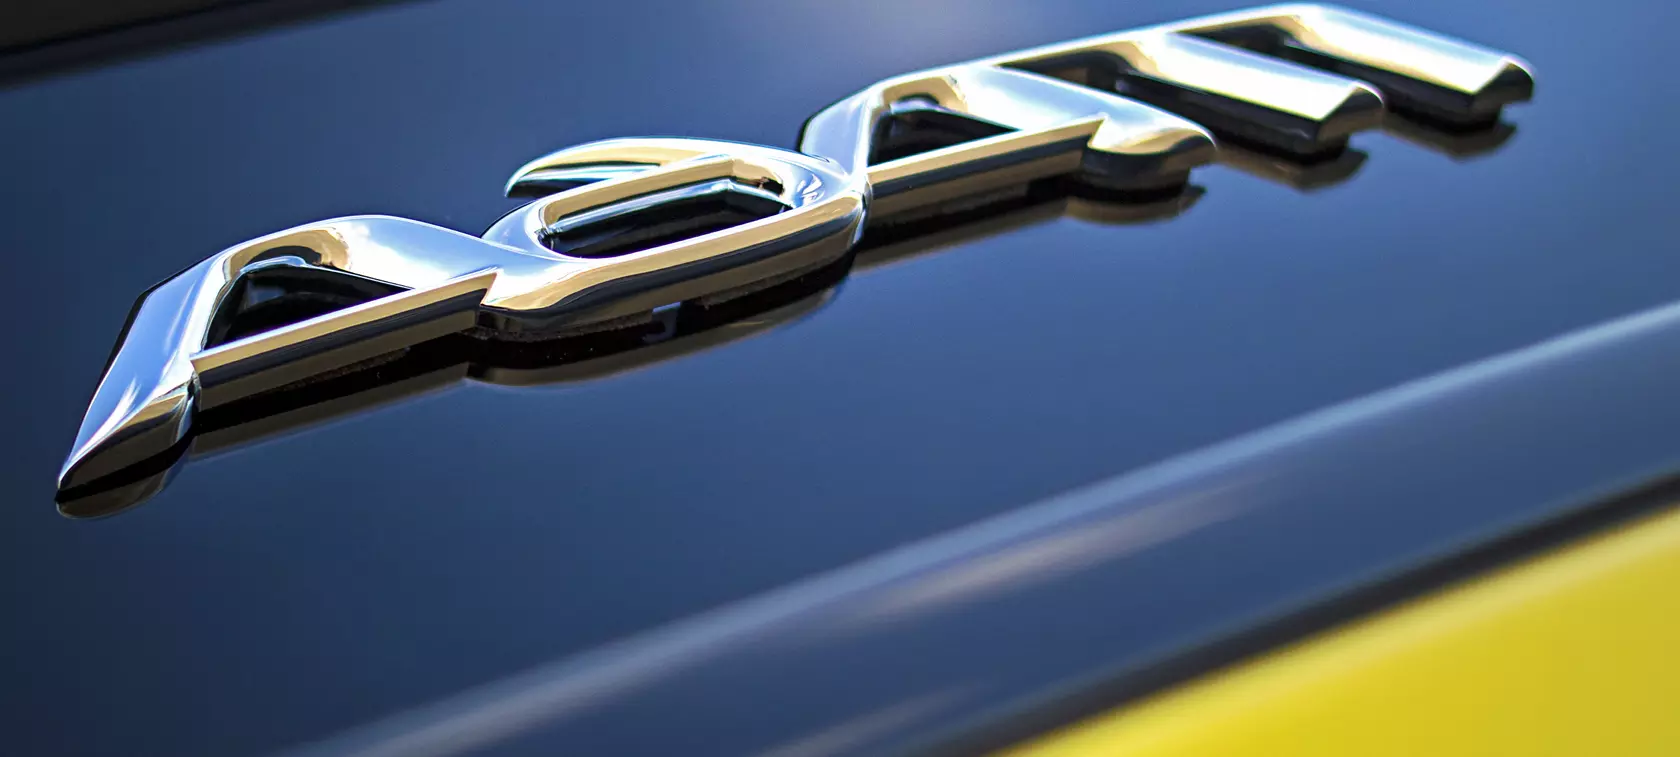 Opel Adam LPG - saving in style